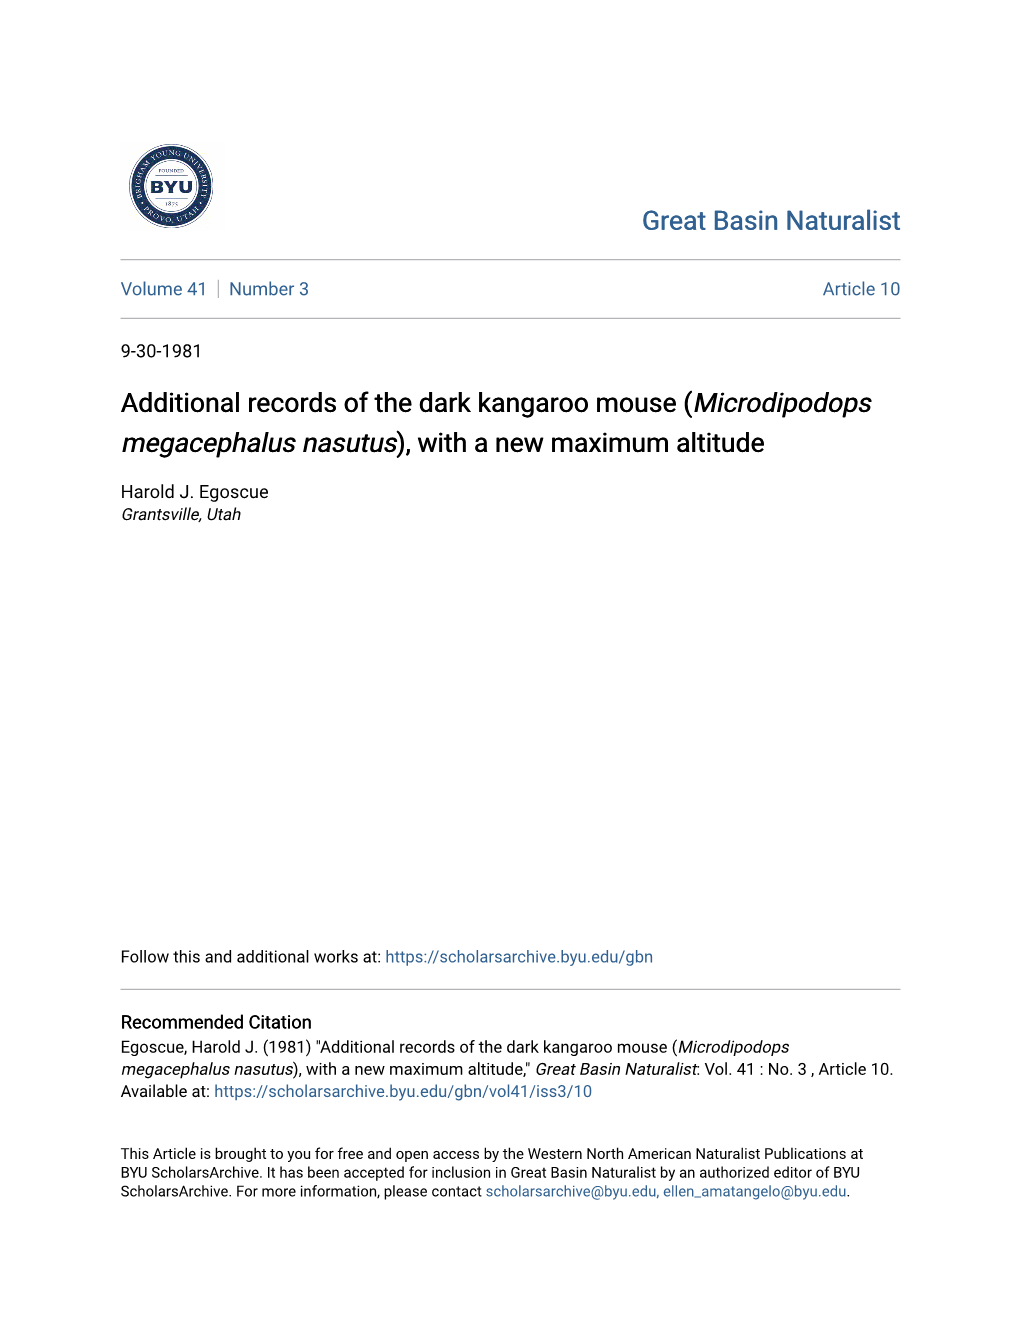 Additional Records of the Dark Kangaroo Mouse (Microdipodops Megacephalus Nasutus), with a New Maximum Altitude